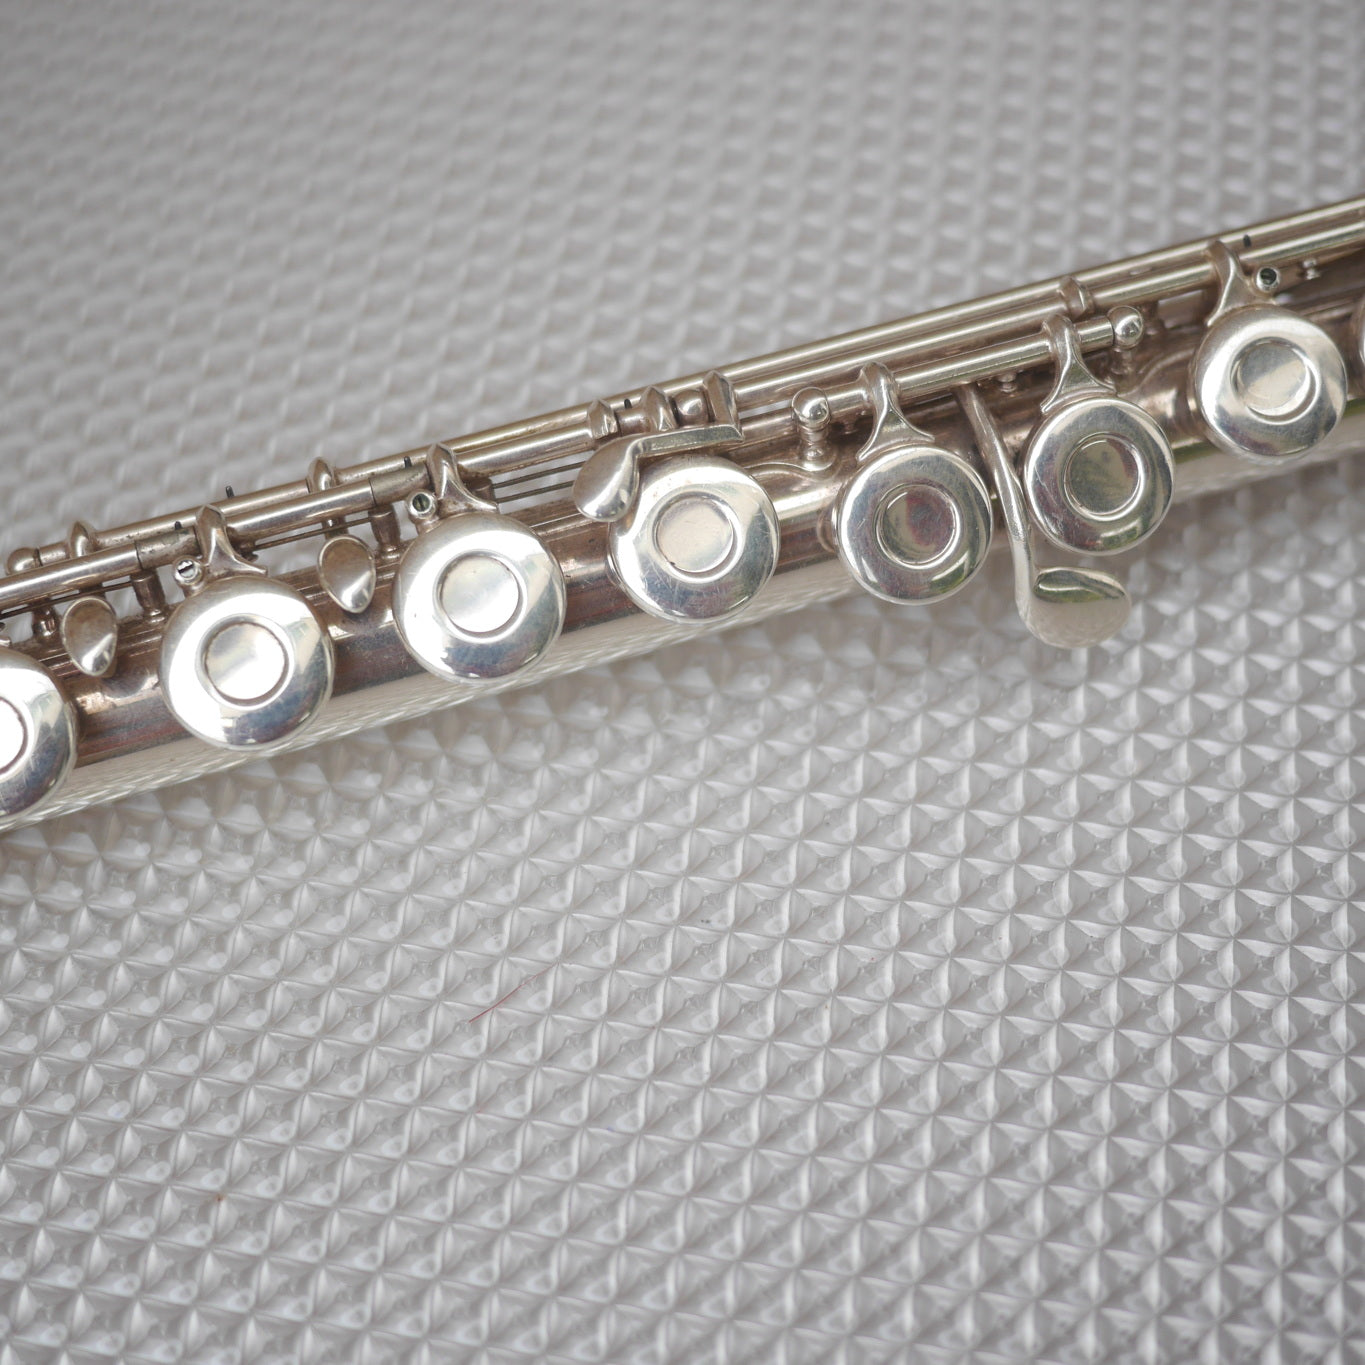 Gemeinhardt 2SP Flute Nickel Silver finish (used)